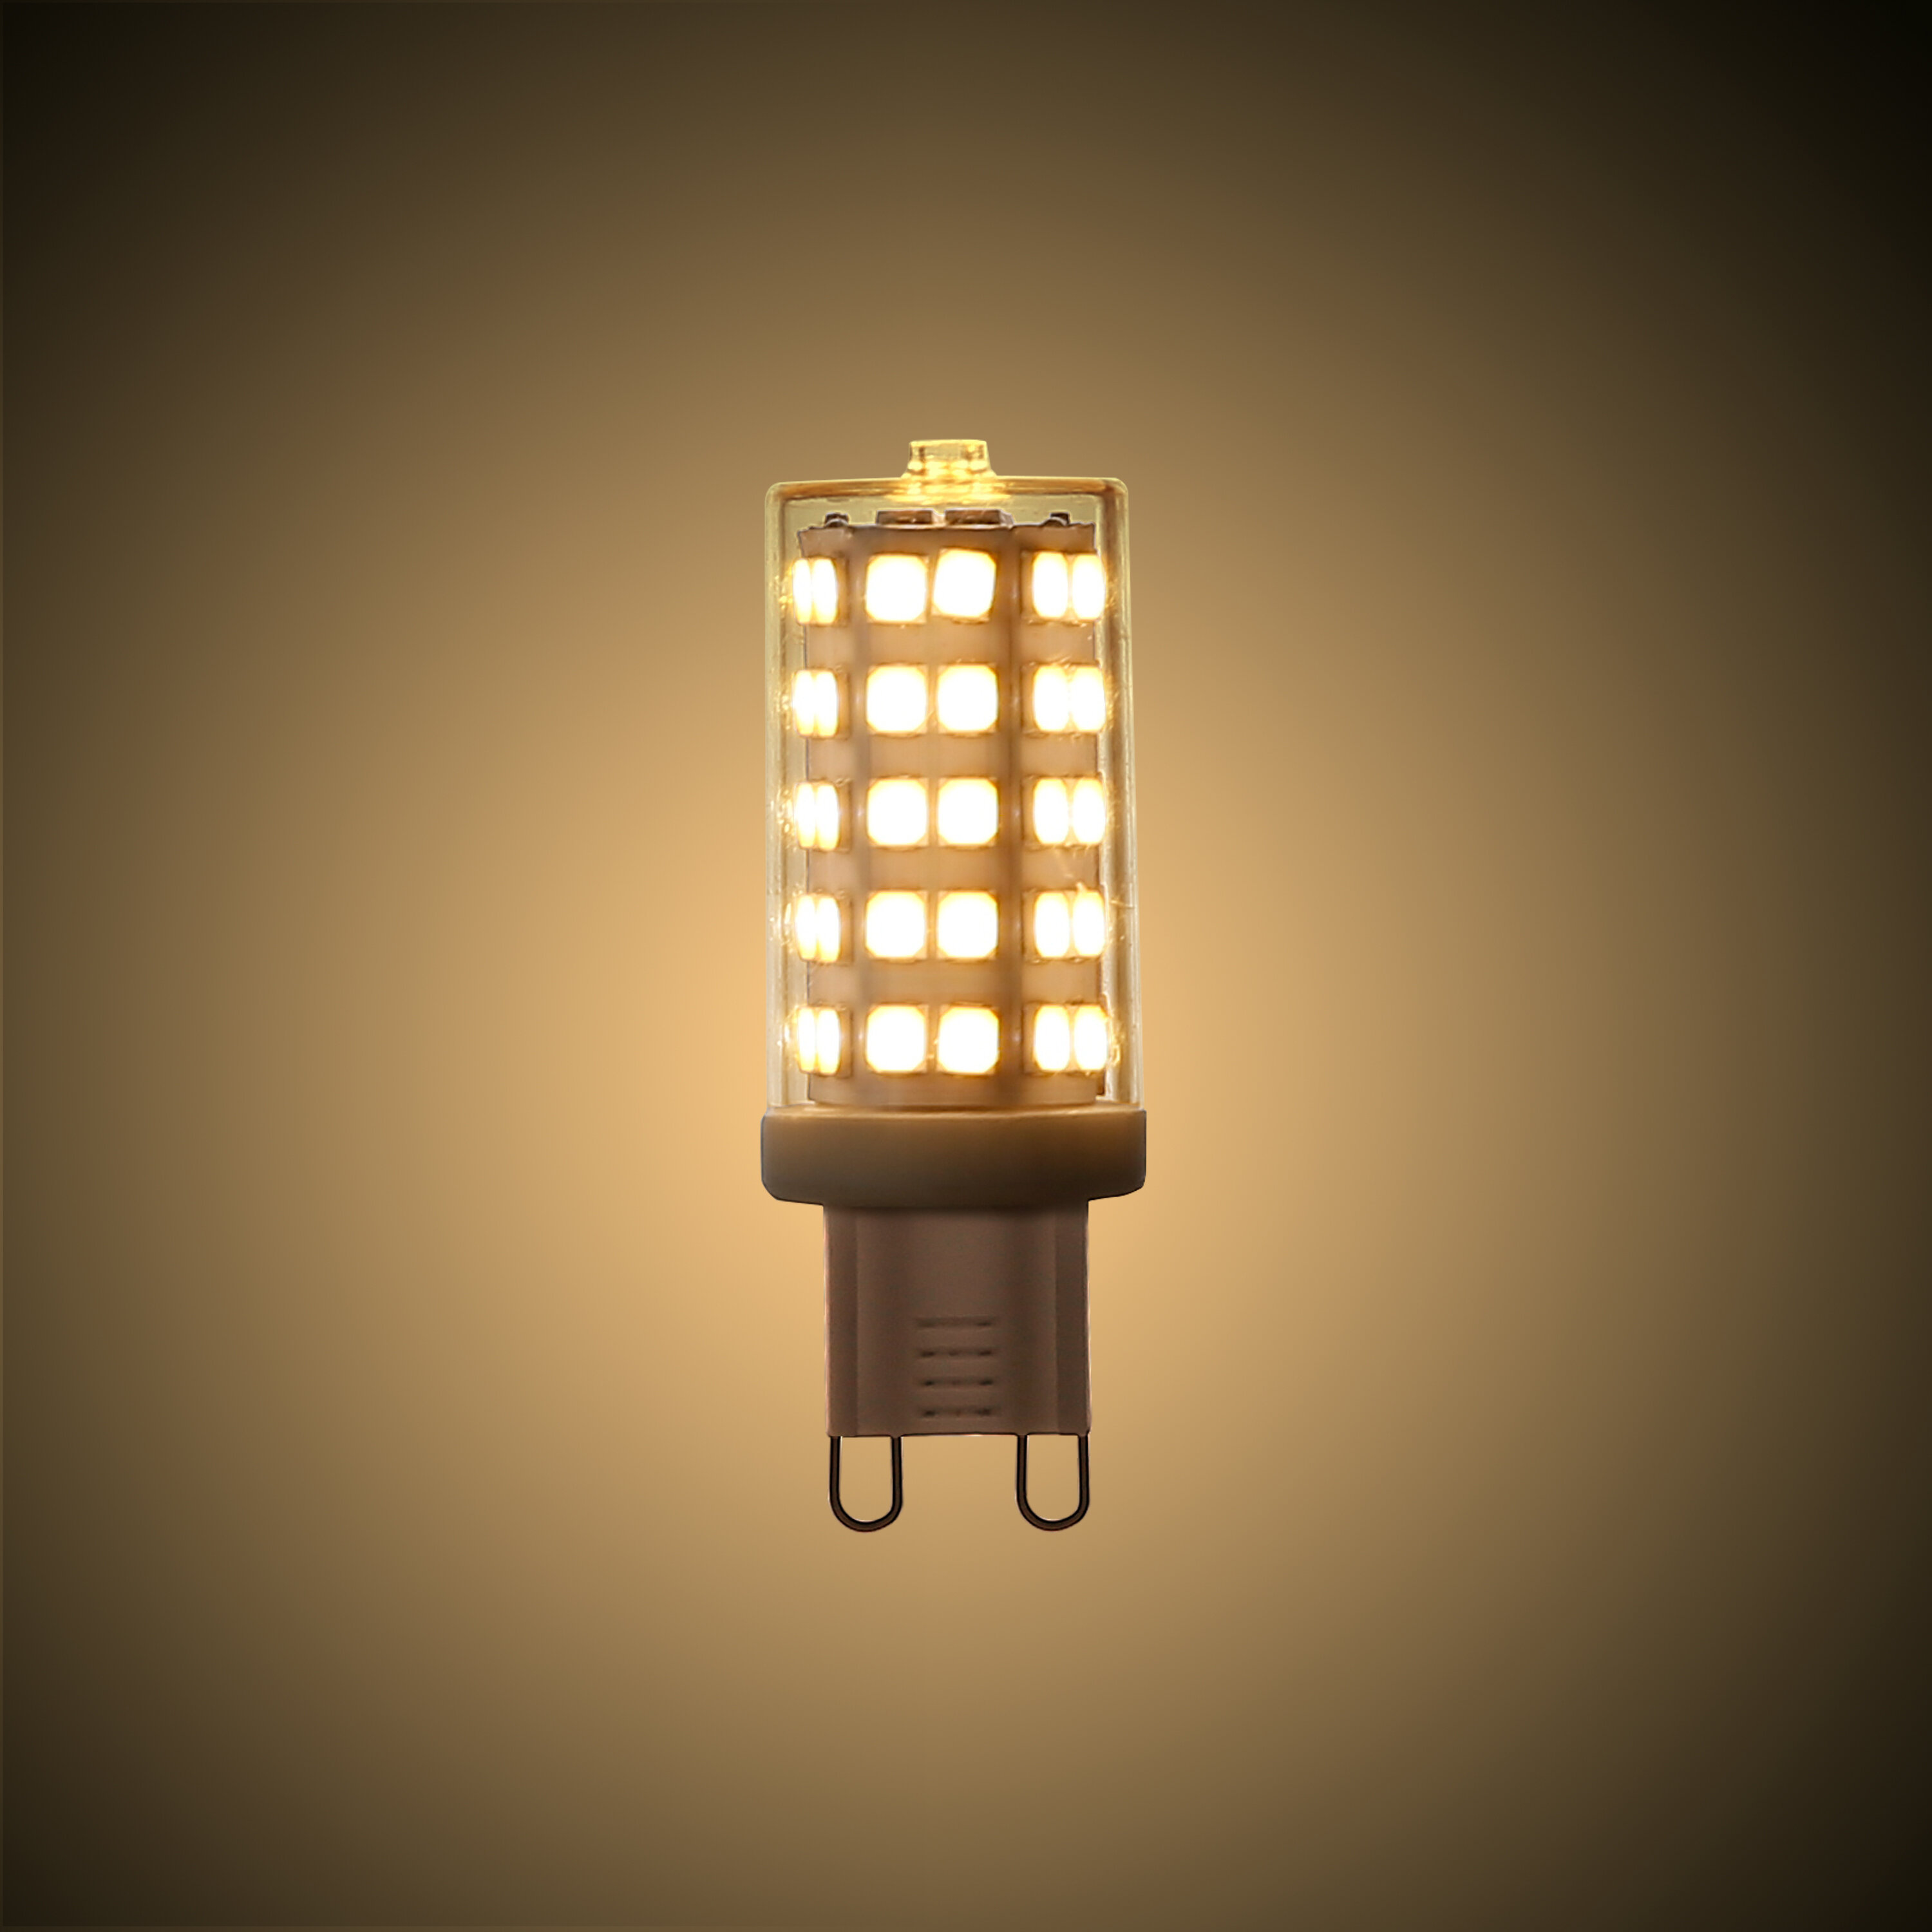 Intrekking oplichterij afdeling Light Society 4 Watt (40 Watt Equivalent), G9 LED, Dimmable Light Bulb, Warm  White (3000K) G9/Bi-pin Base & Reviews | Wayfair